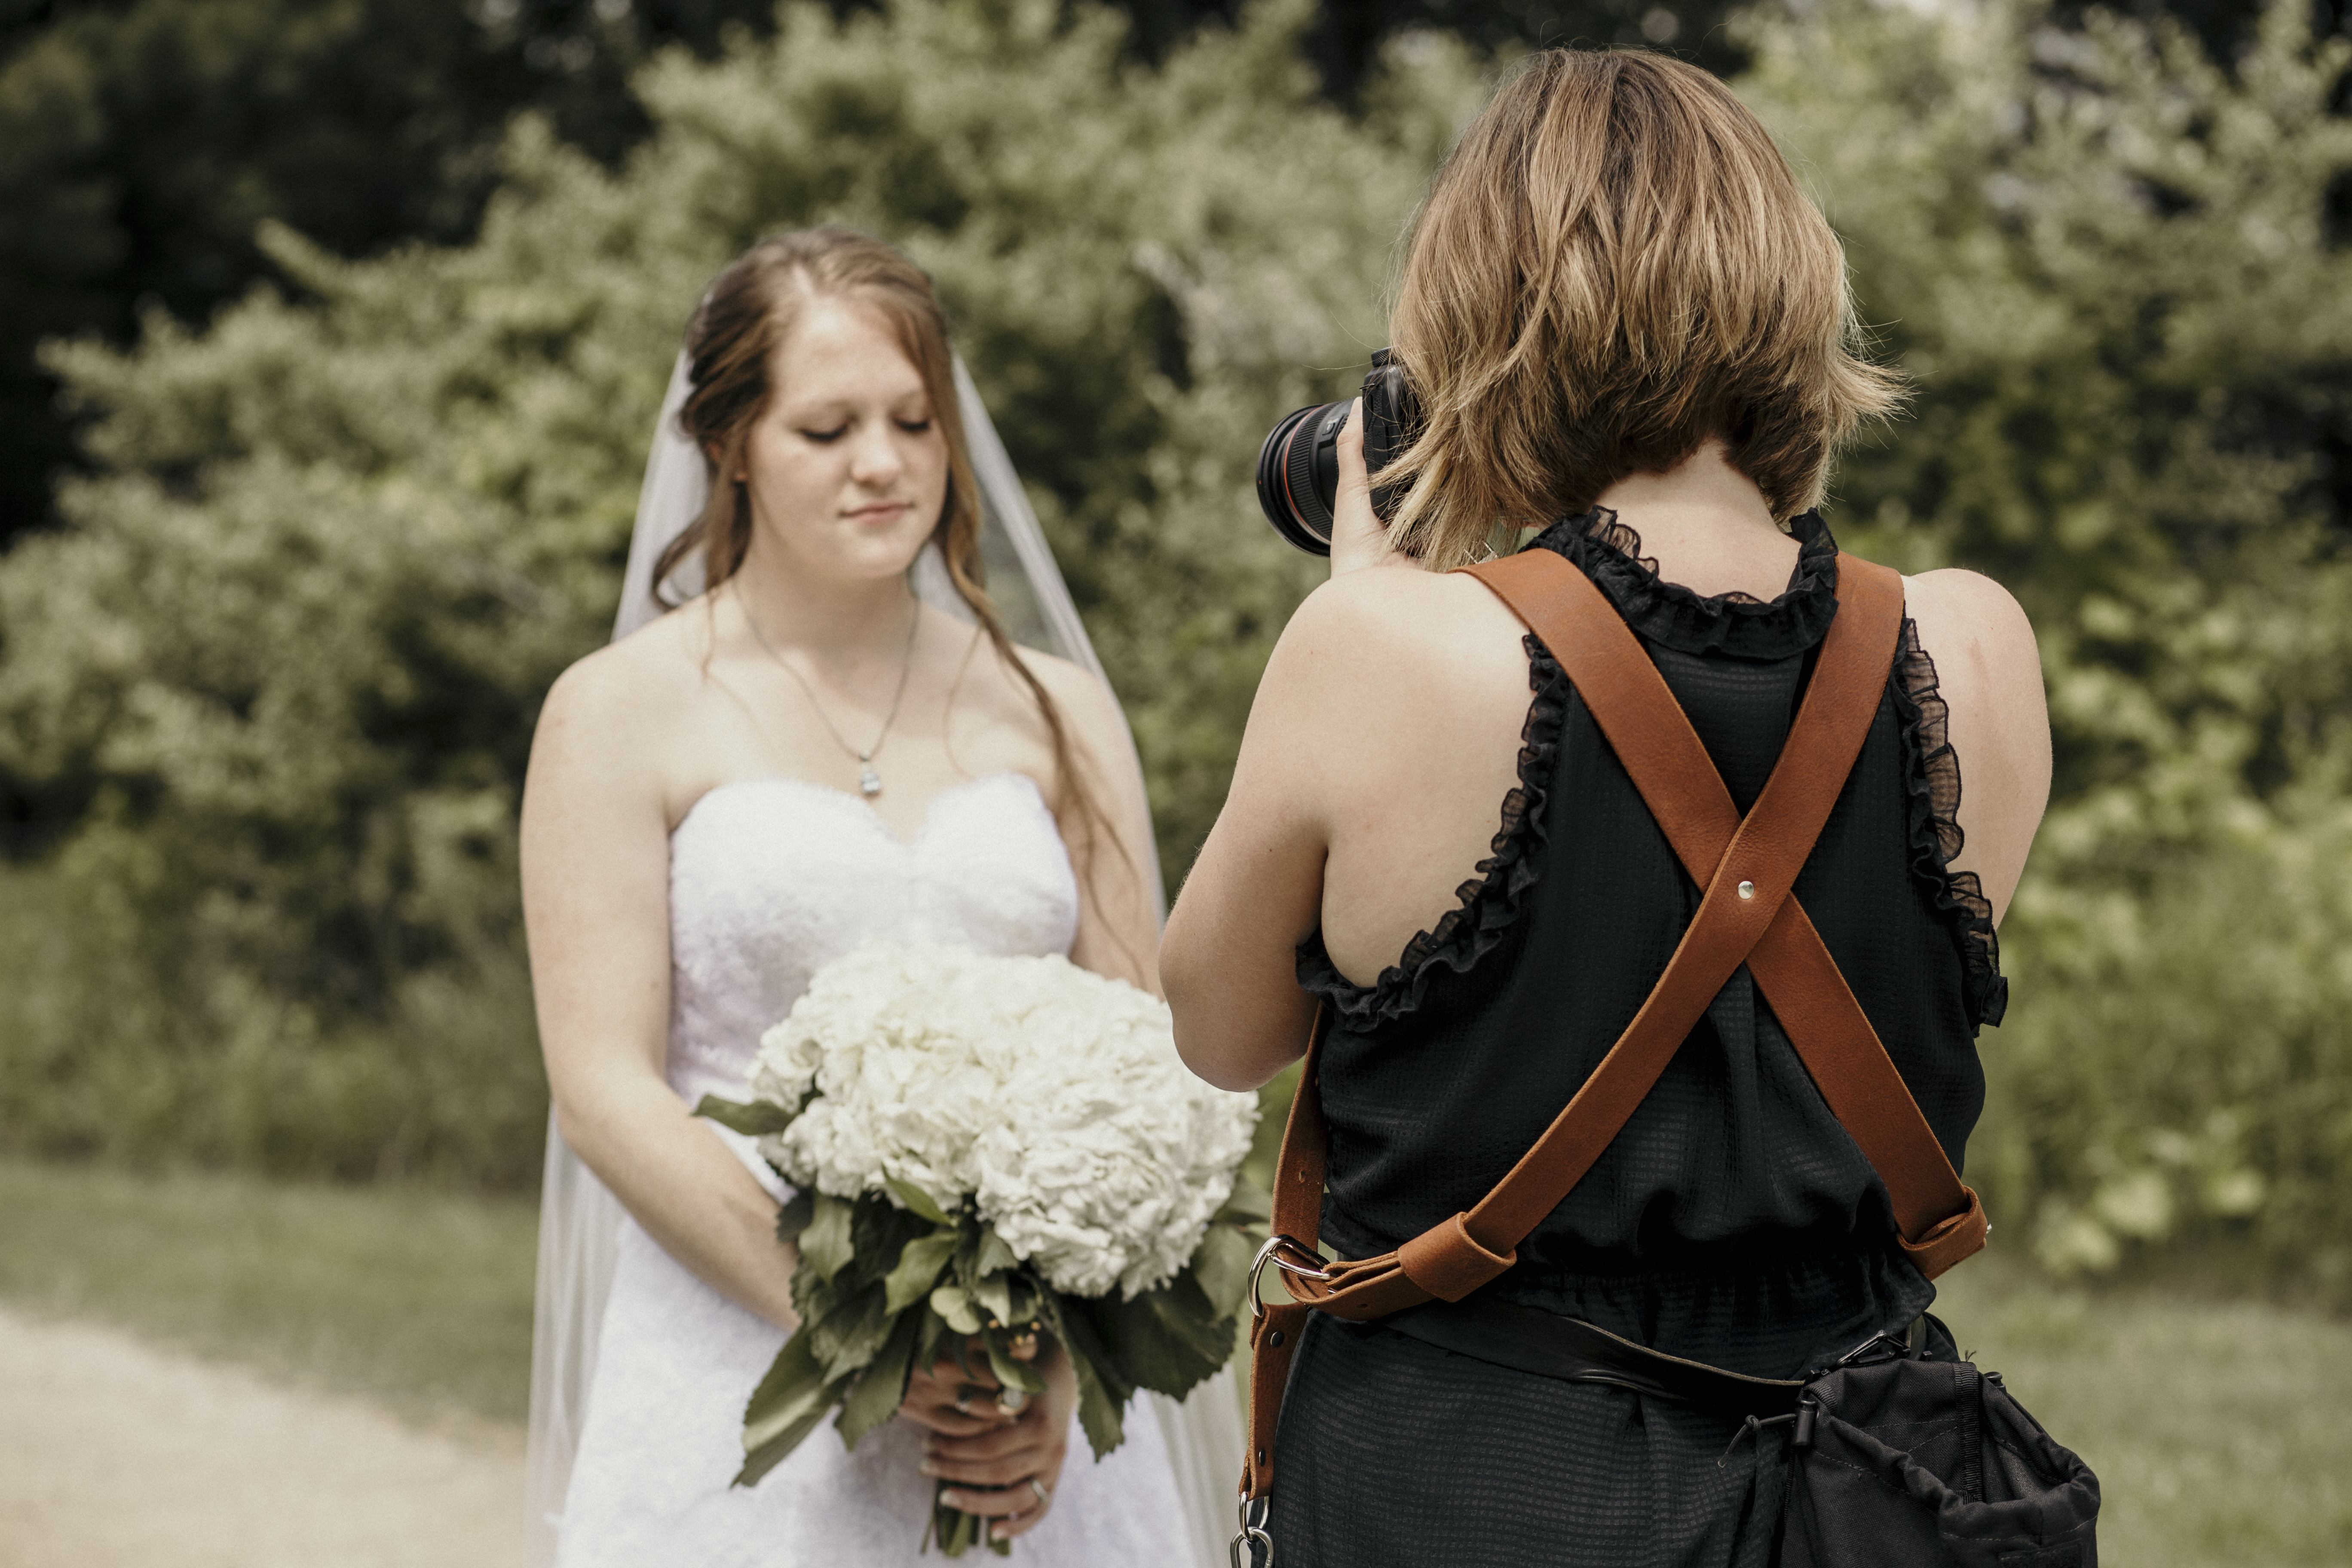 photographer taking photo of bride holding flowers